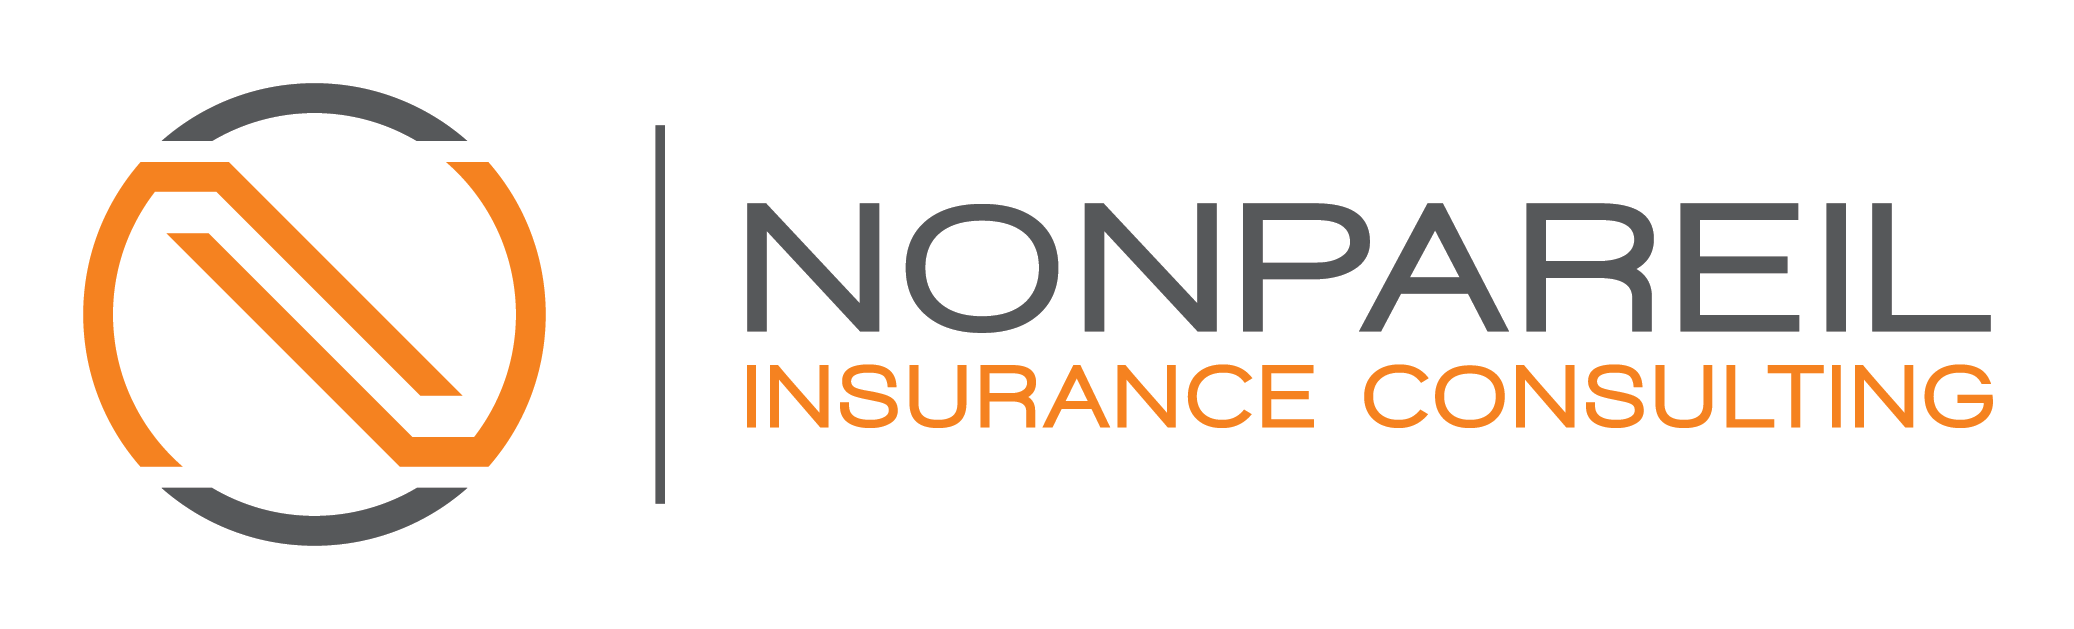 Nonpareil Insurance Consulting